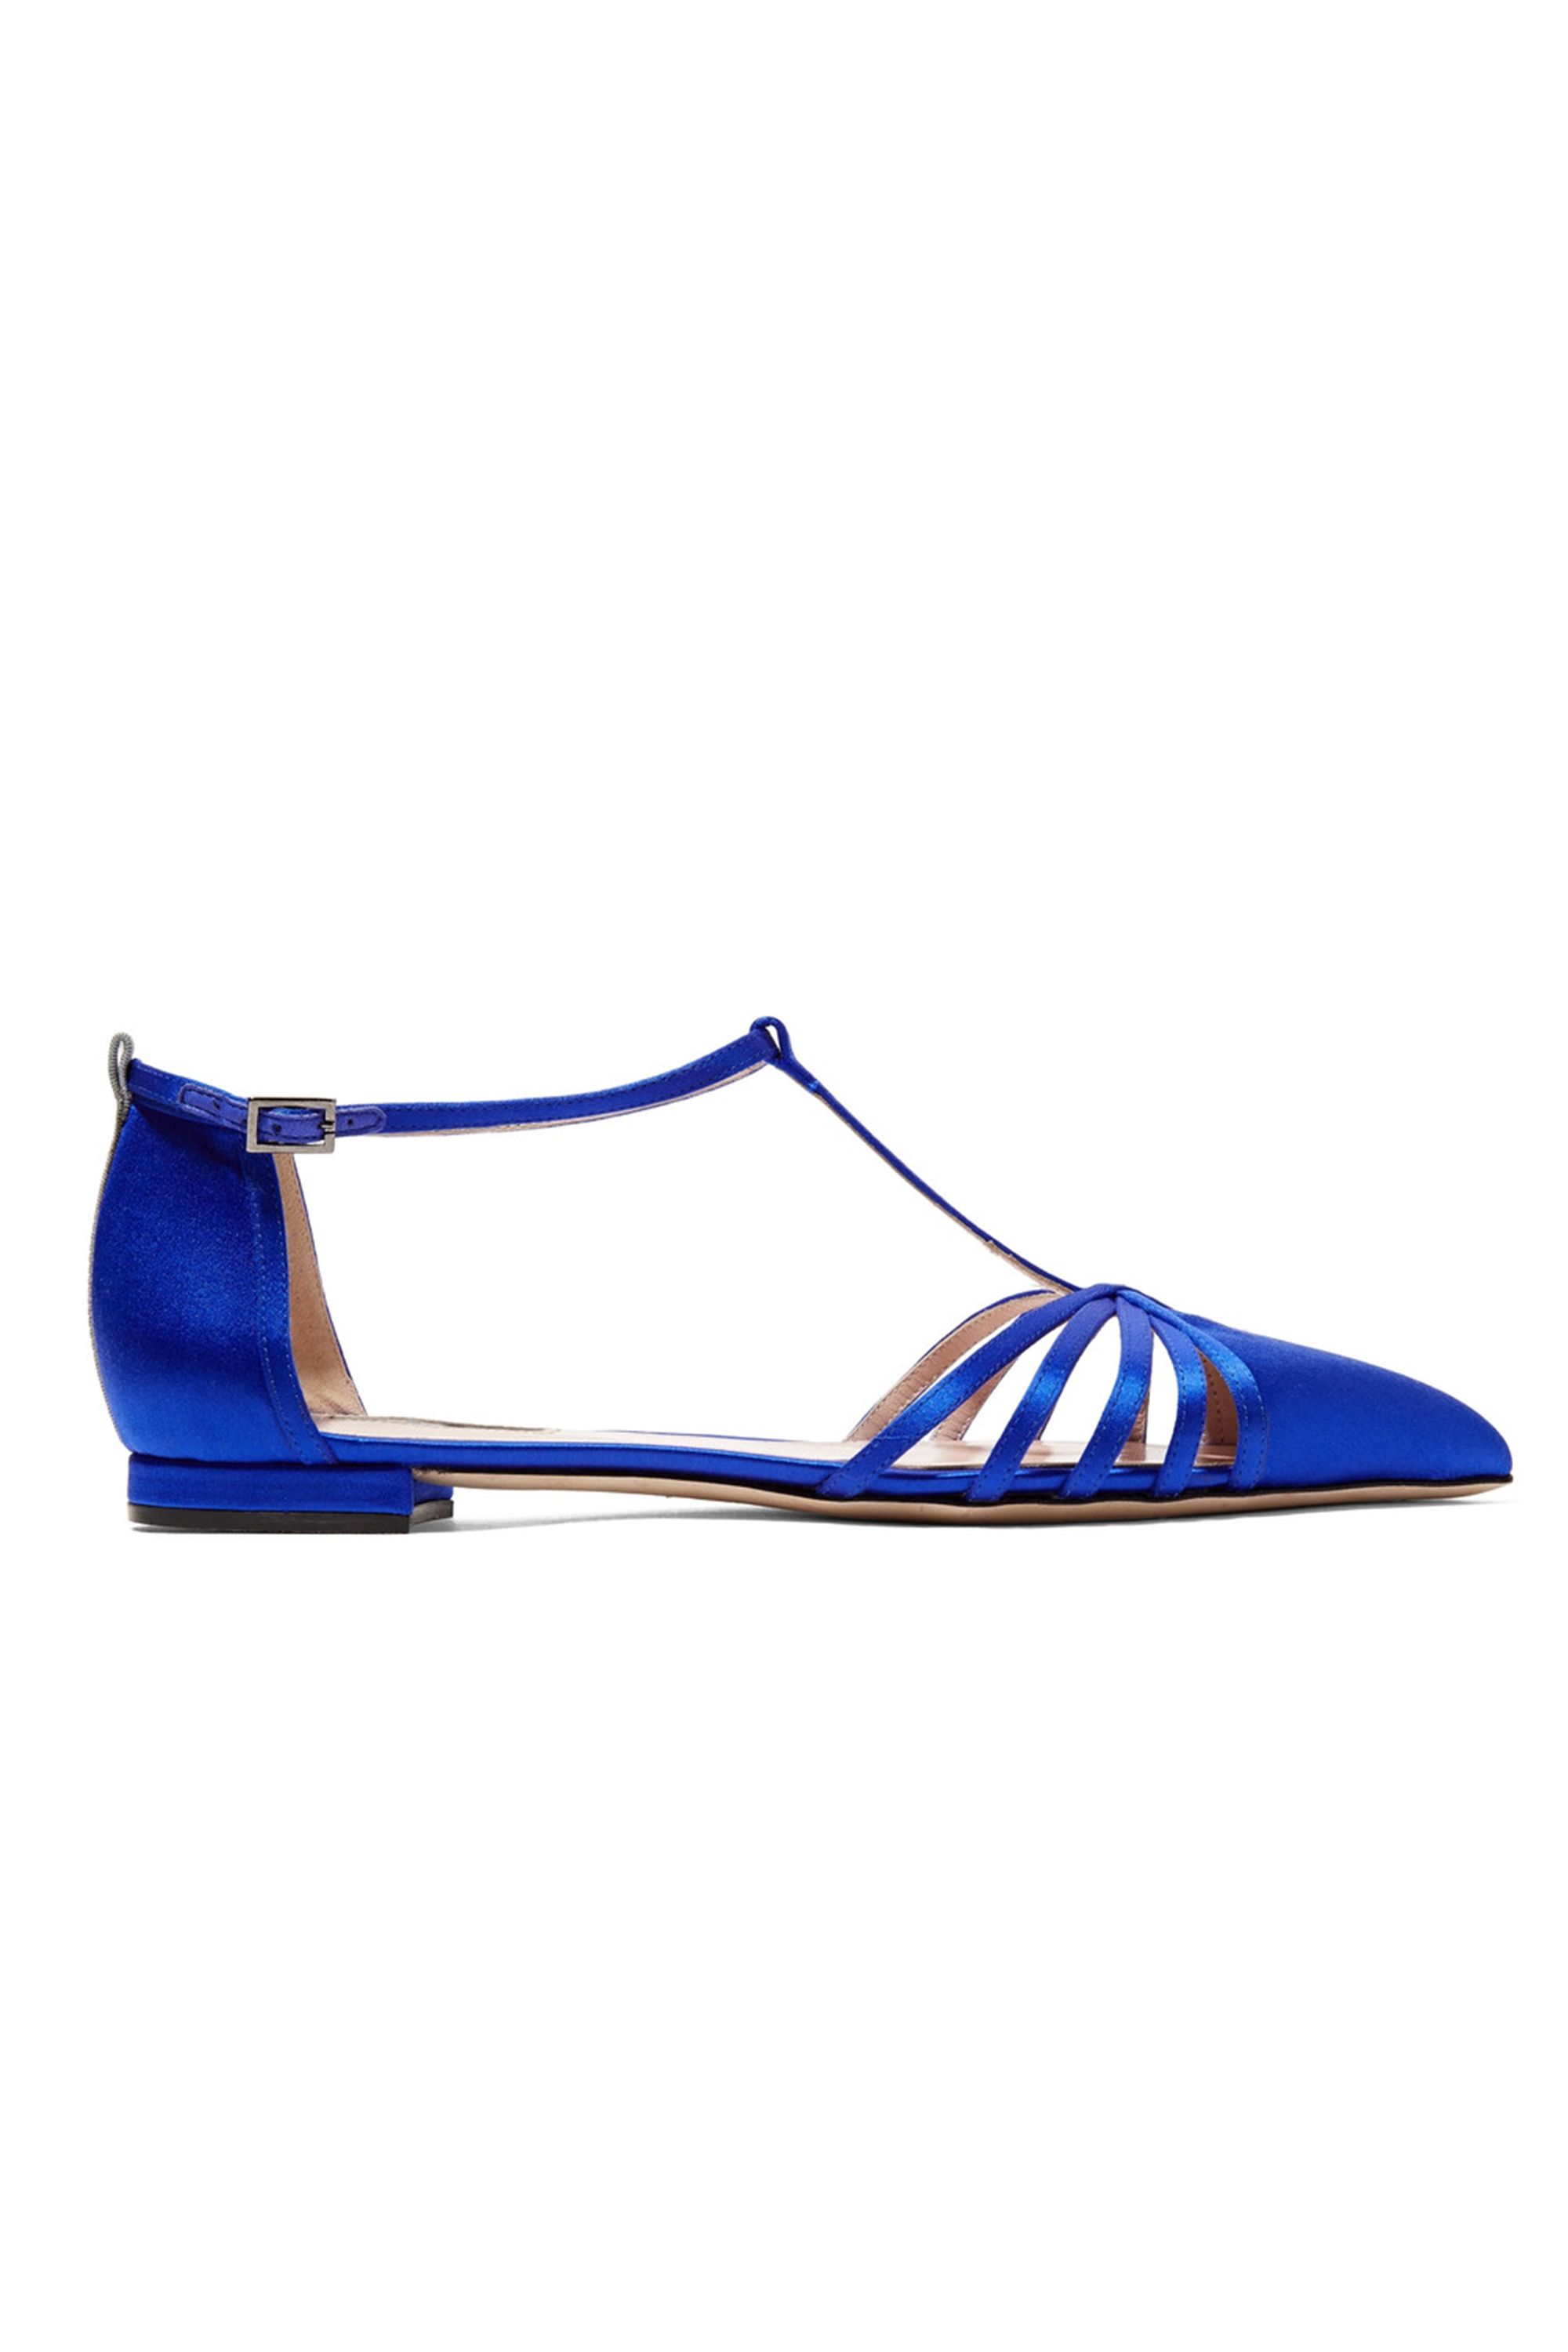 blue louboutin wedding shoes